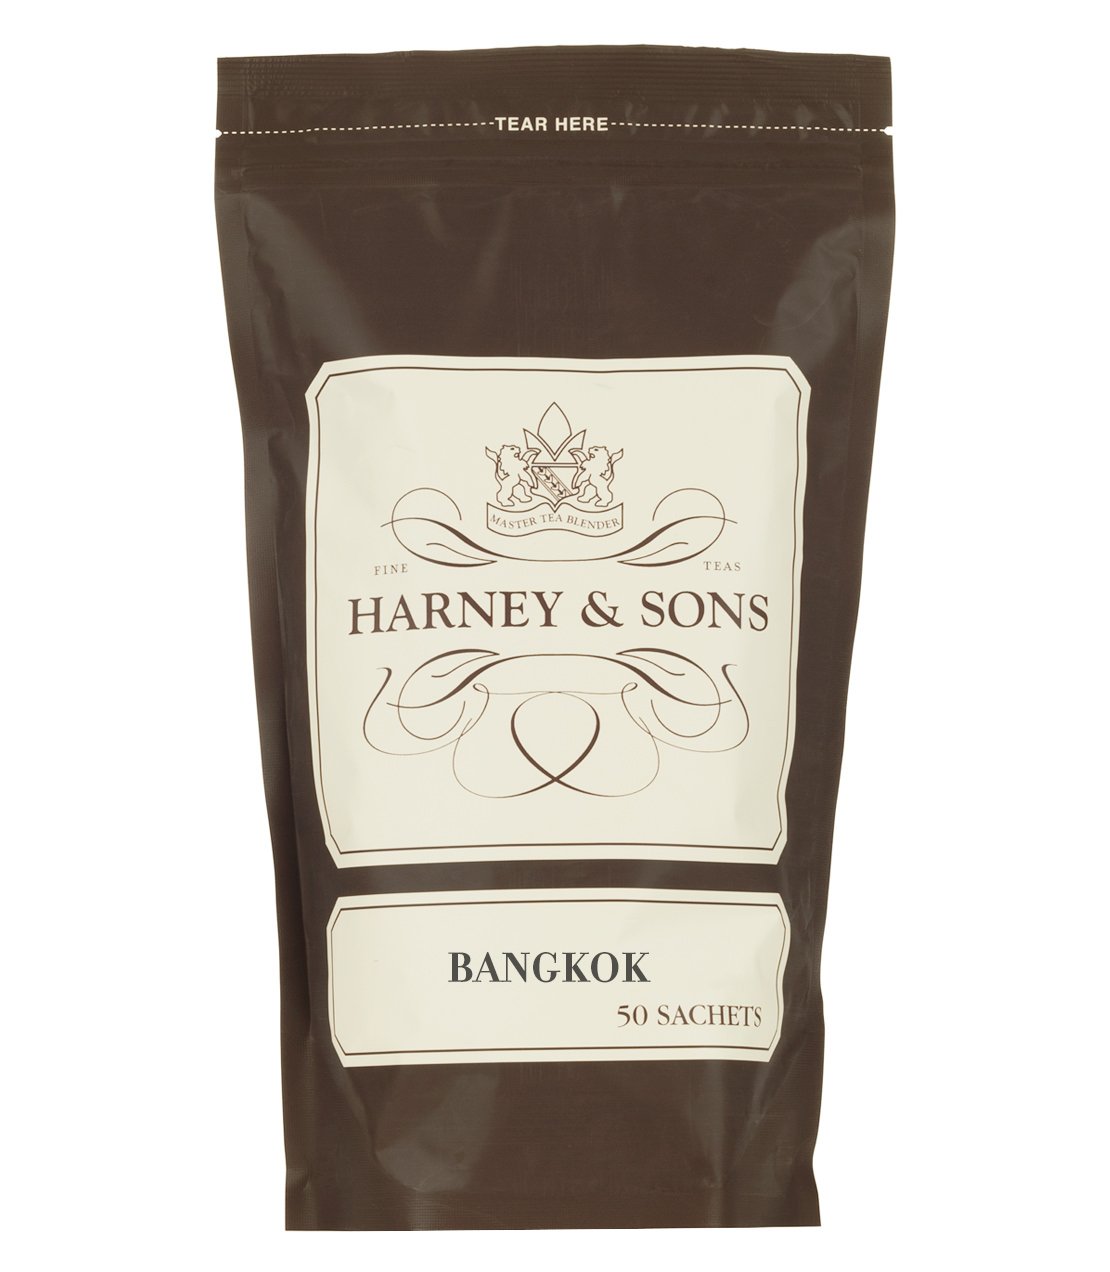 Bangkok - Harney & Sons Teas, European Distribution Center